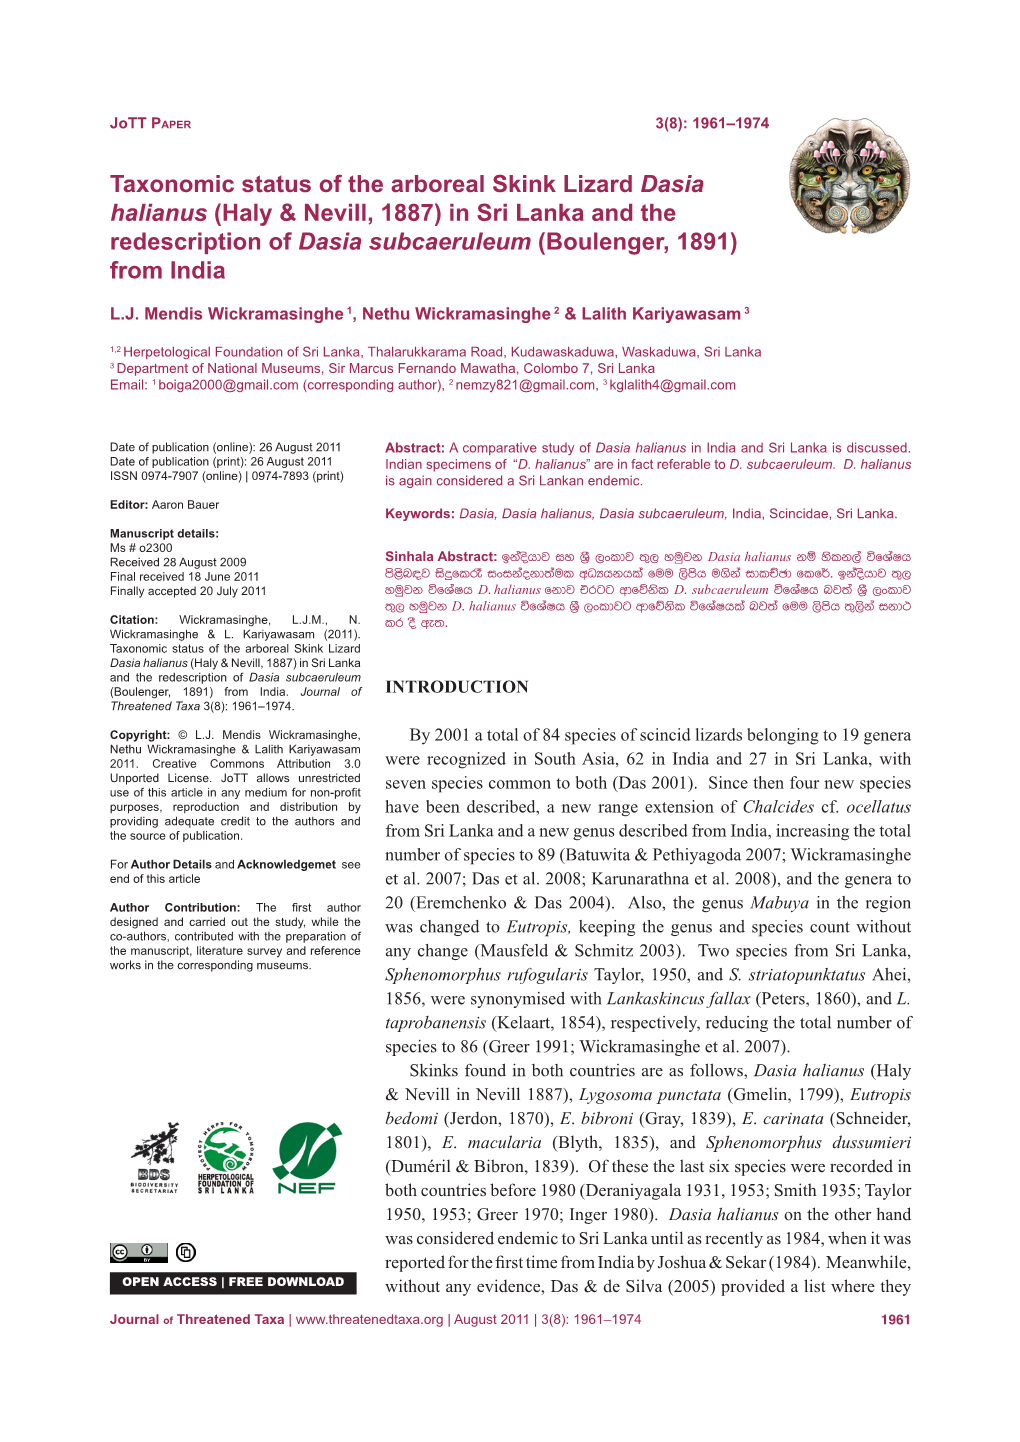 Taxonomic Status of the Arboreal Skink Lizard Dasia Halianus (Haly